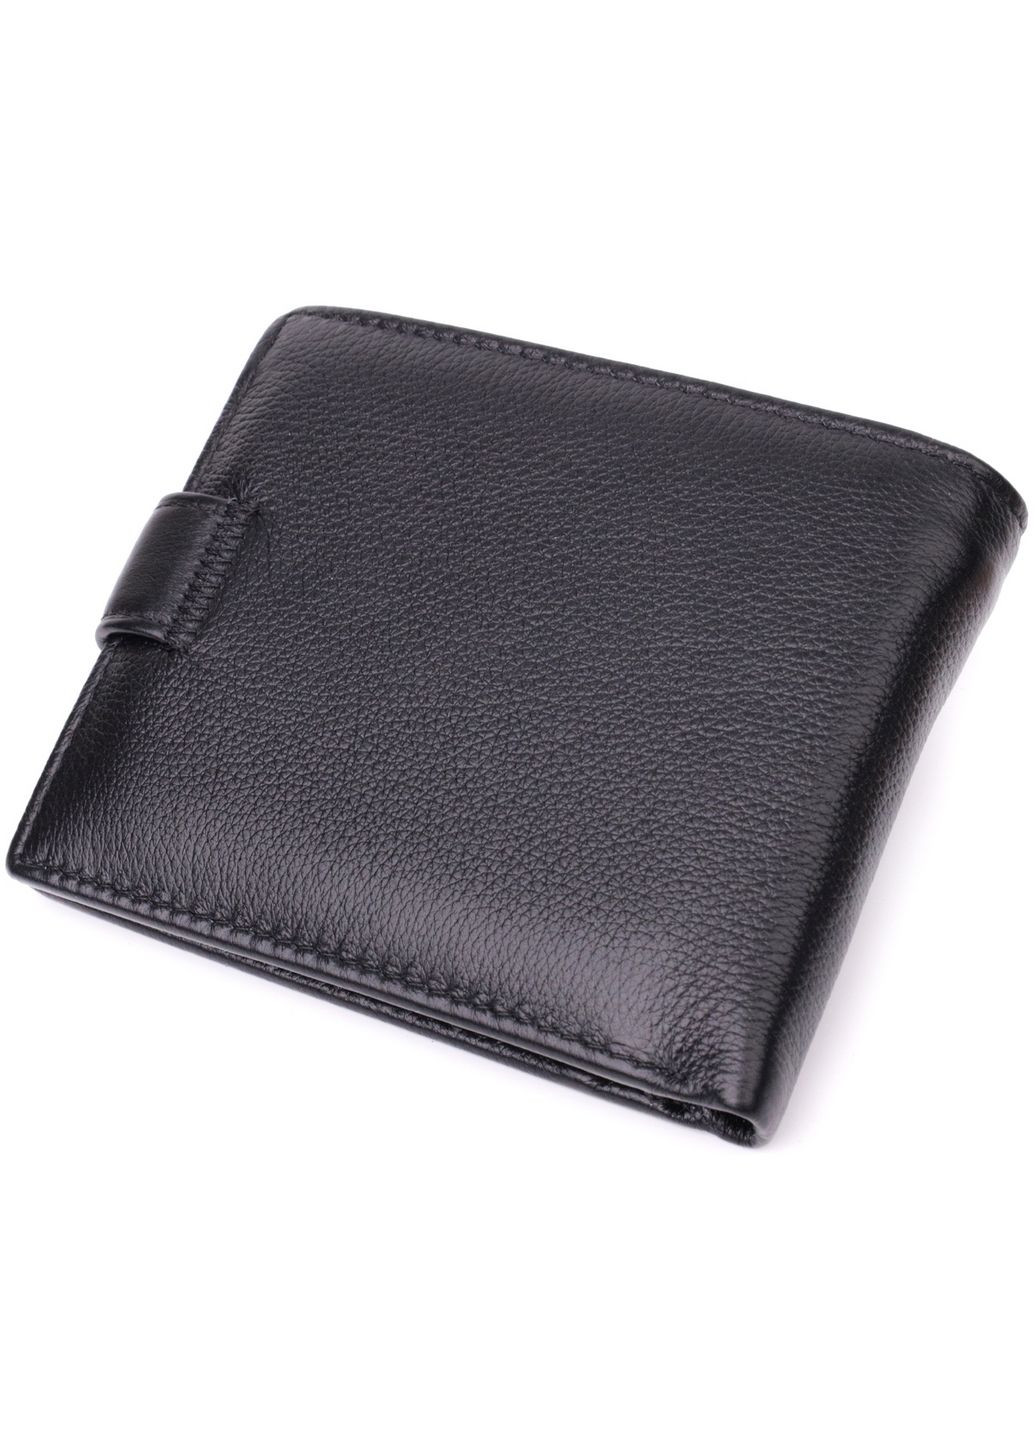 Кожаное мужское портмоне st leather (288135117)